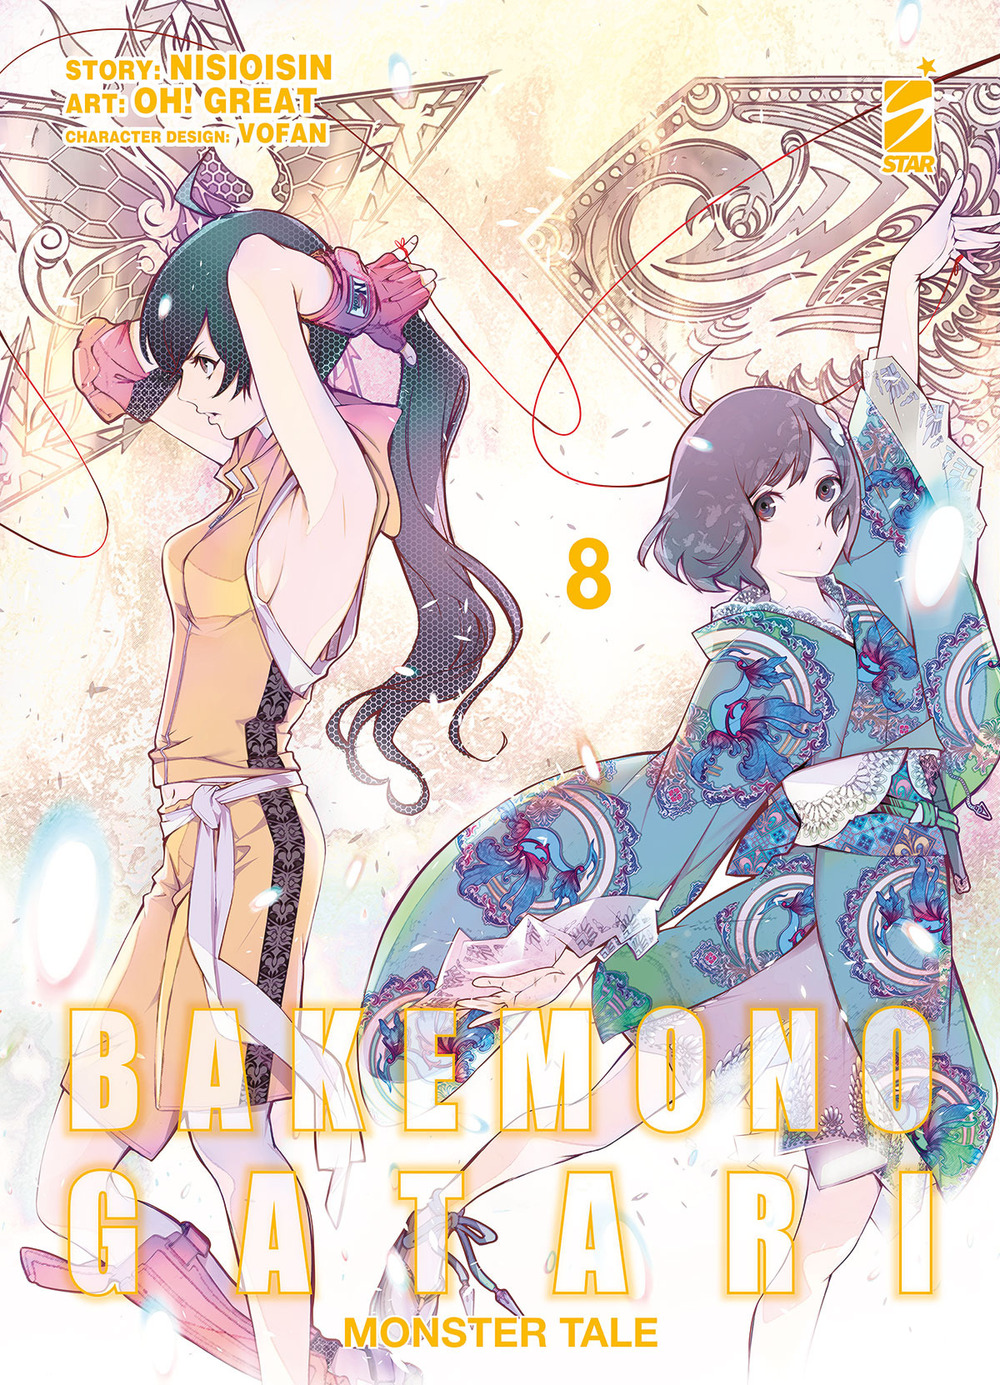 Bakemonogatari. Monster tale. Vol. 8